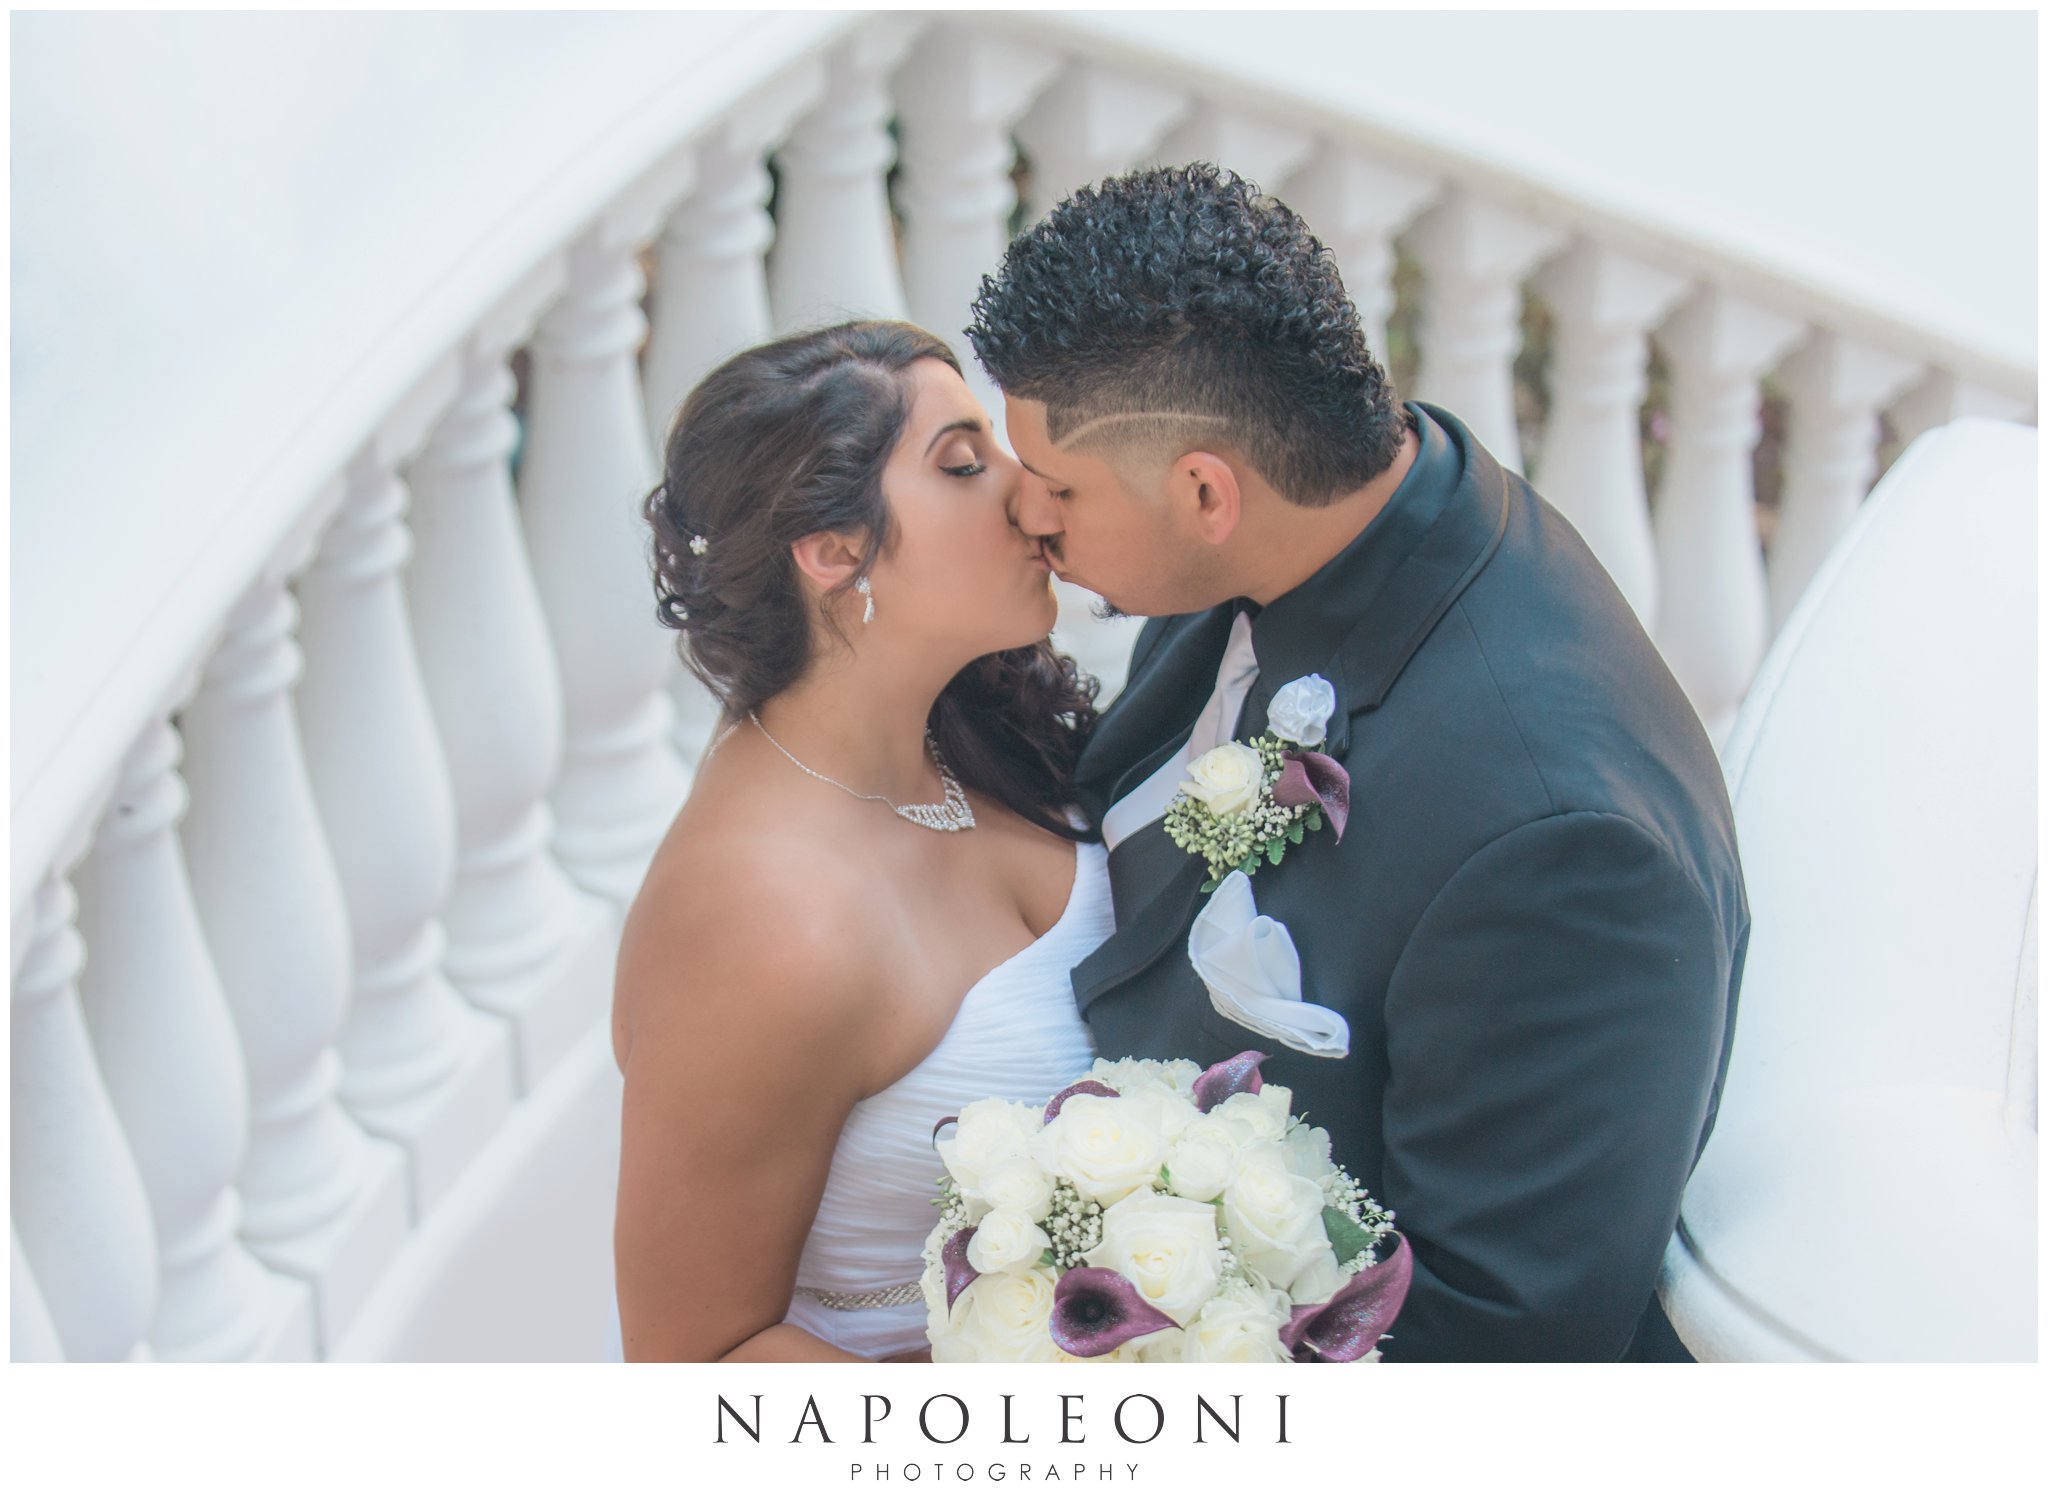 napoleoni-photography_0425b